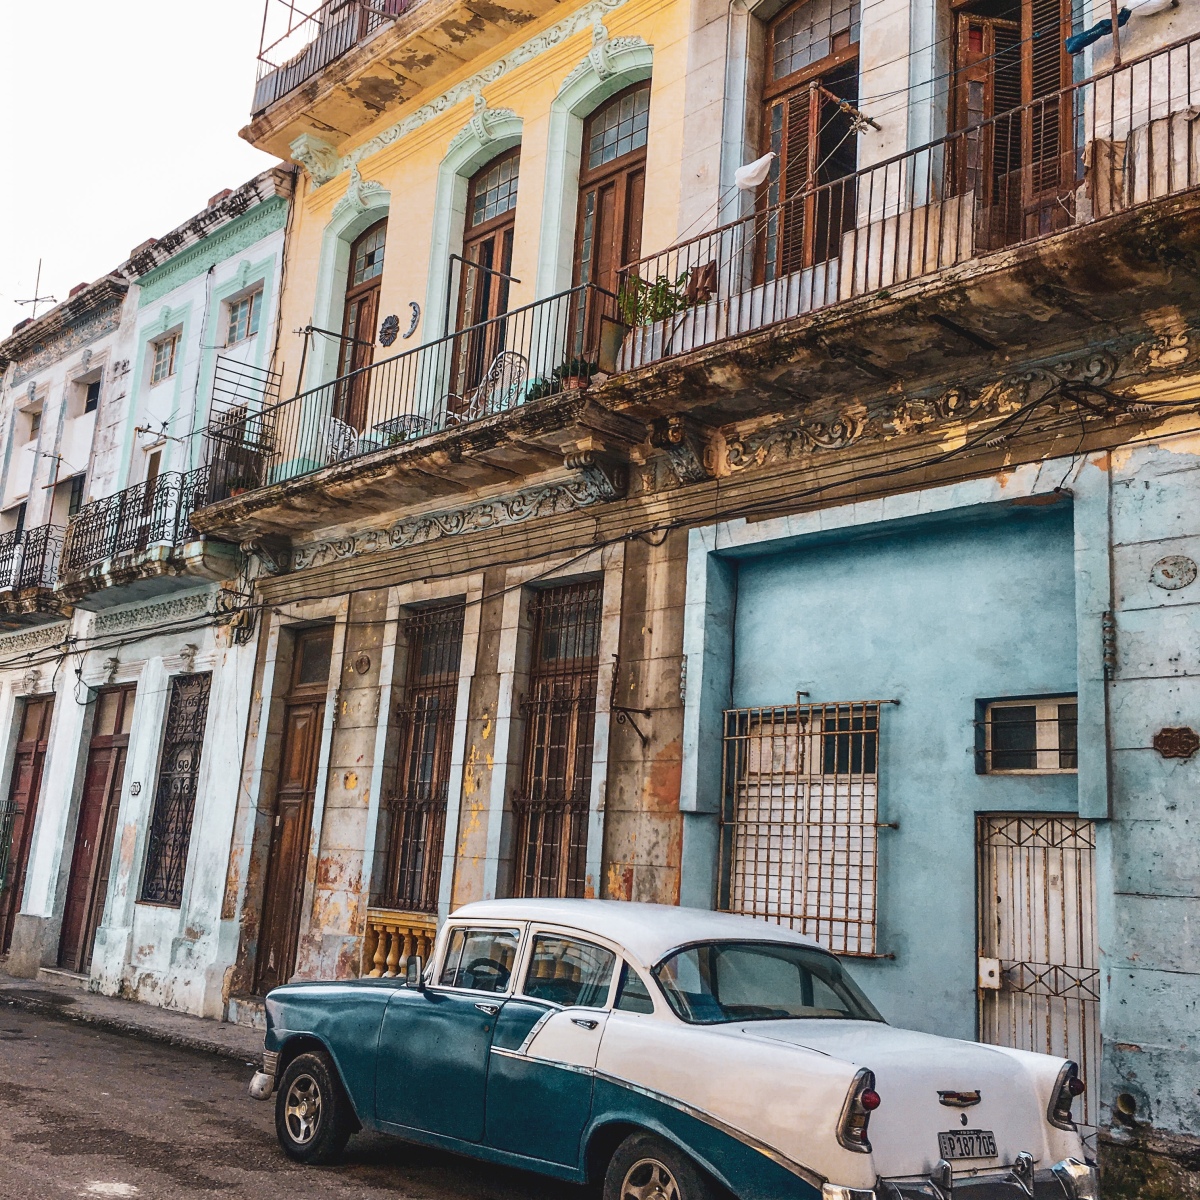 Cuban photo diary, part 1